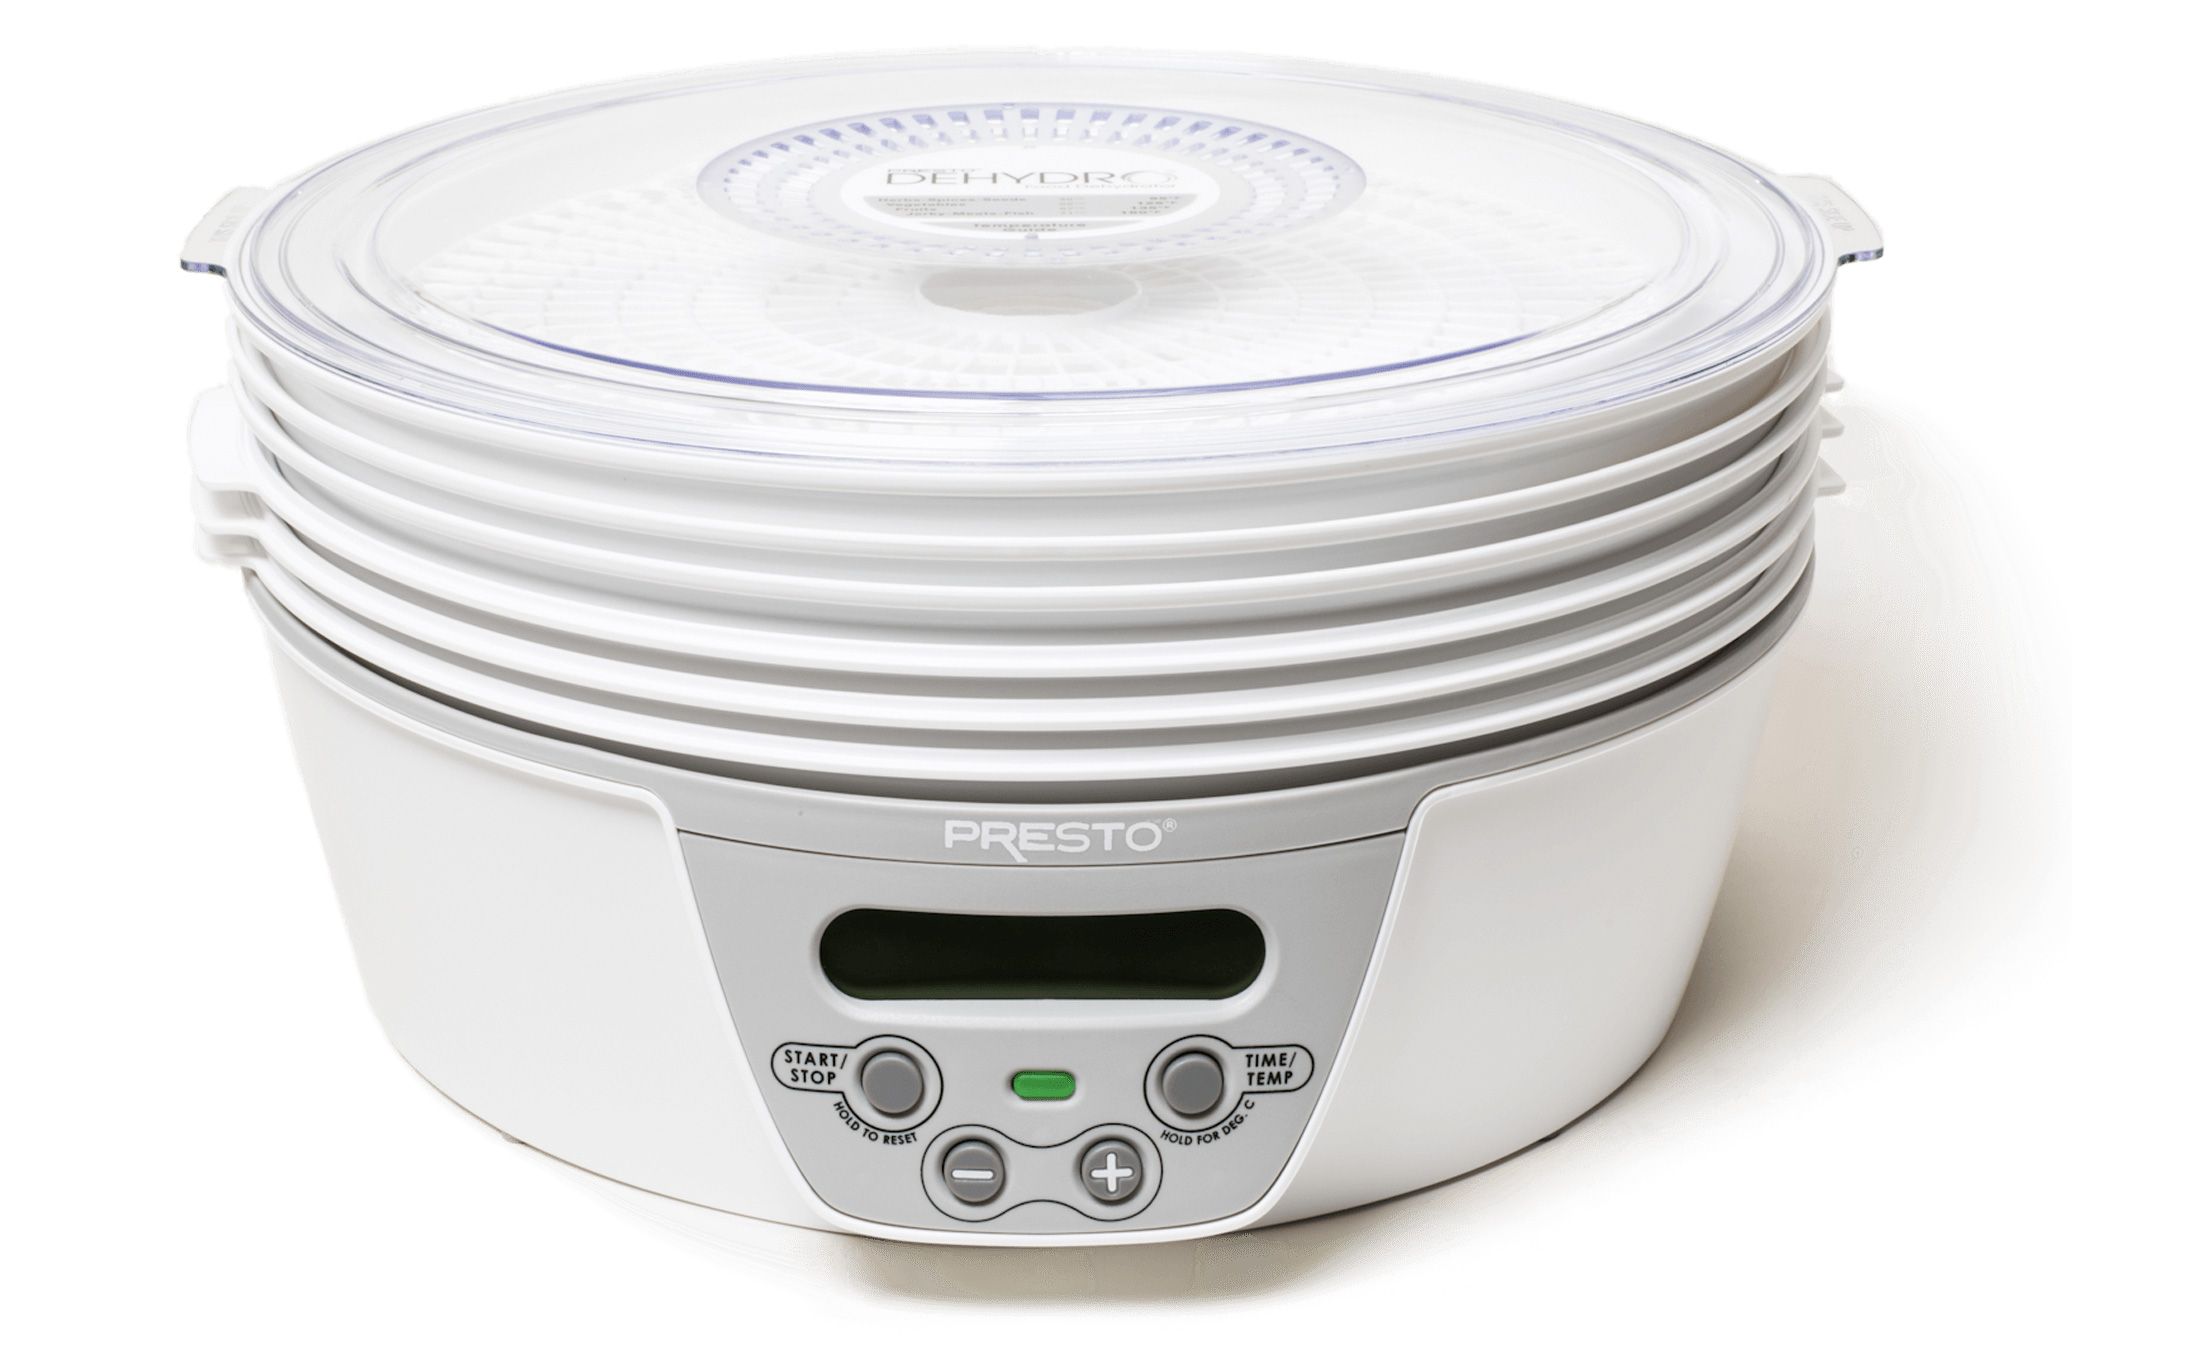  Presto 06300 Dehydro Electric Food Dehydrator, Standard: Home &  Kitchen